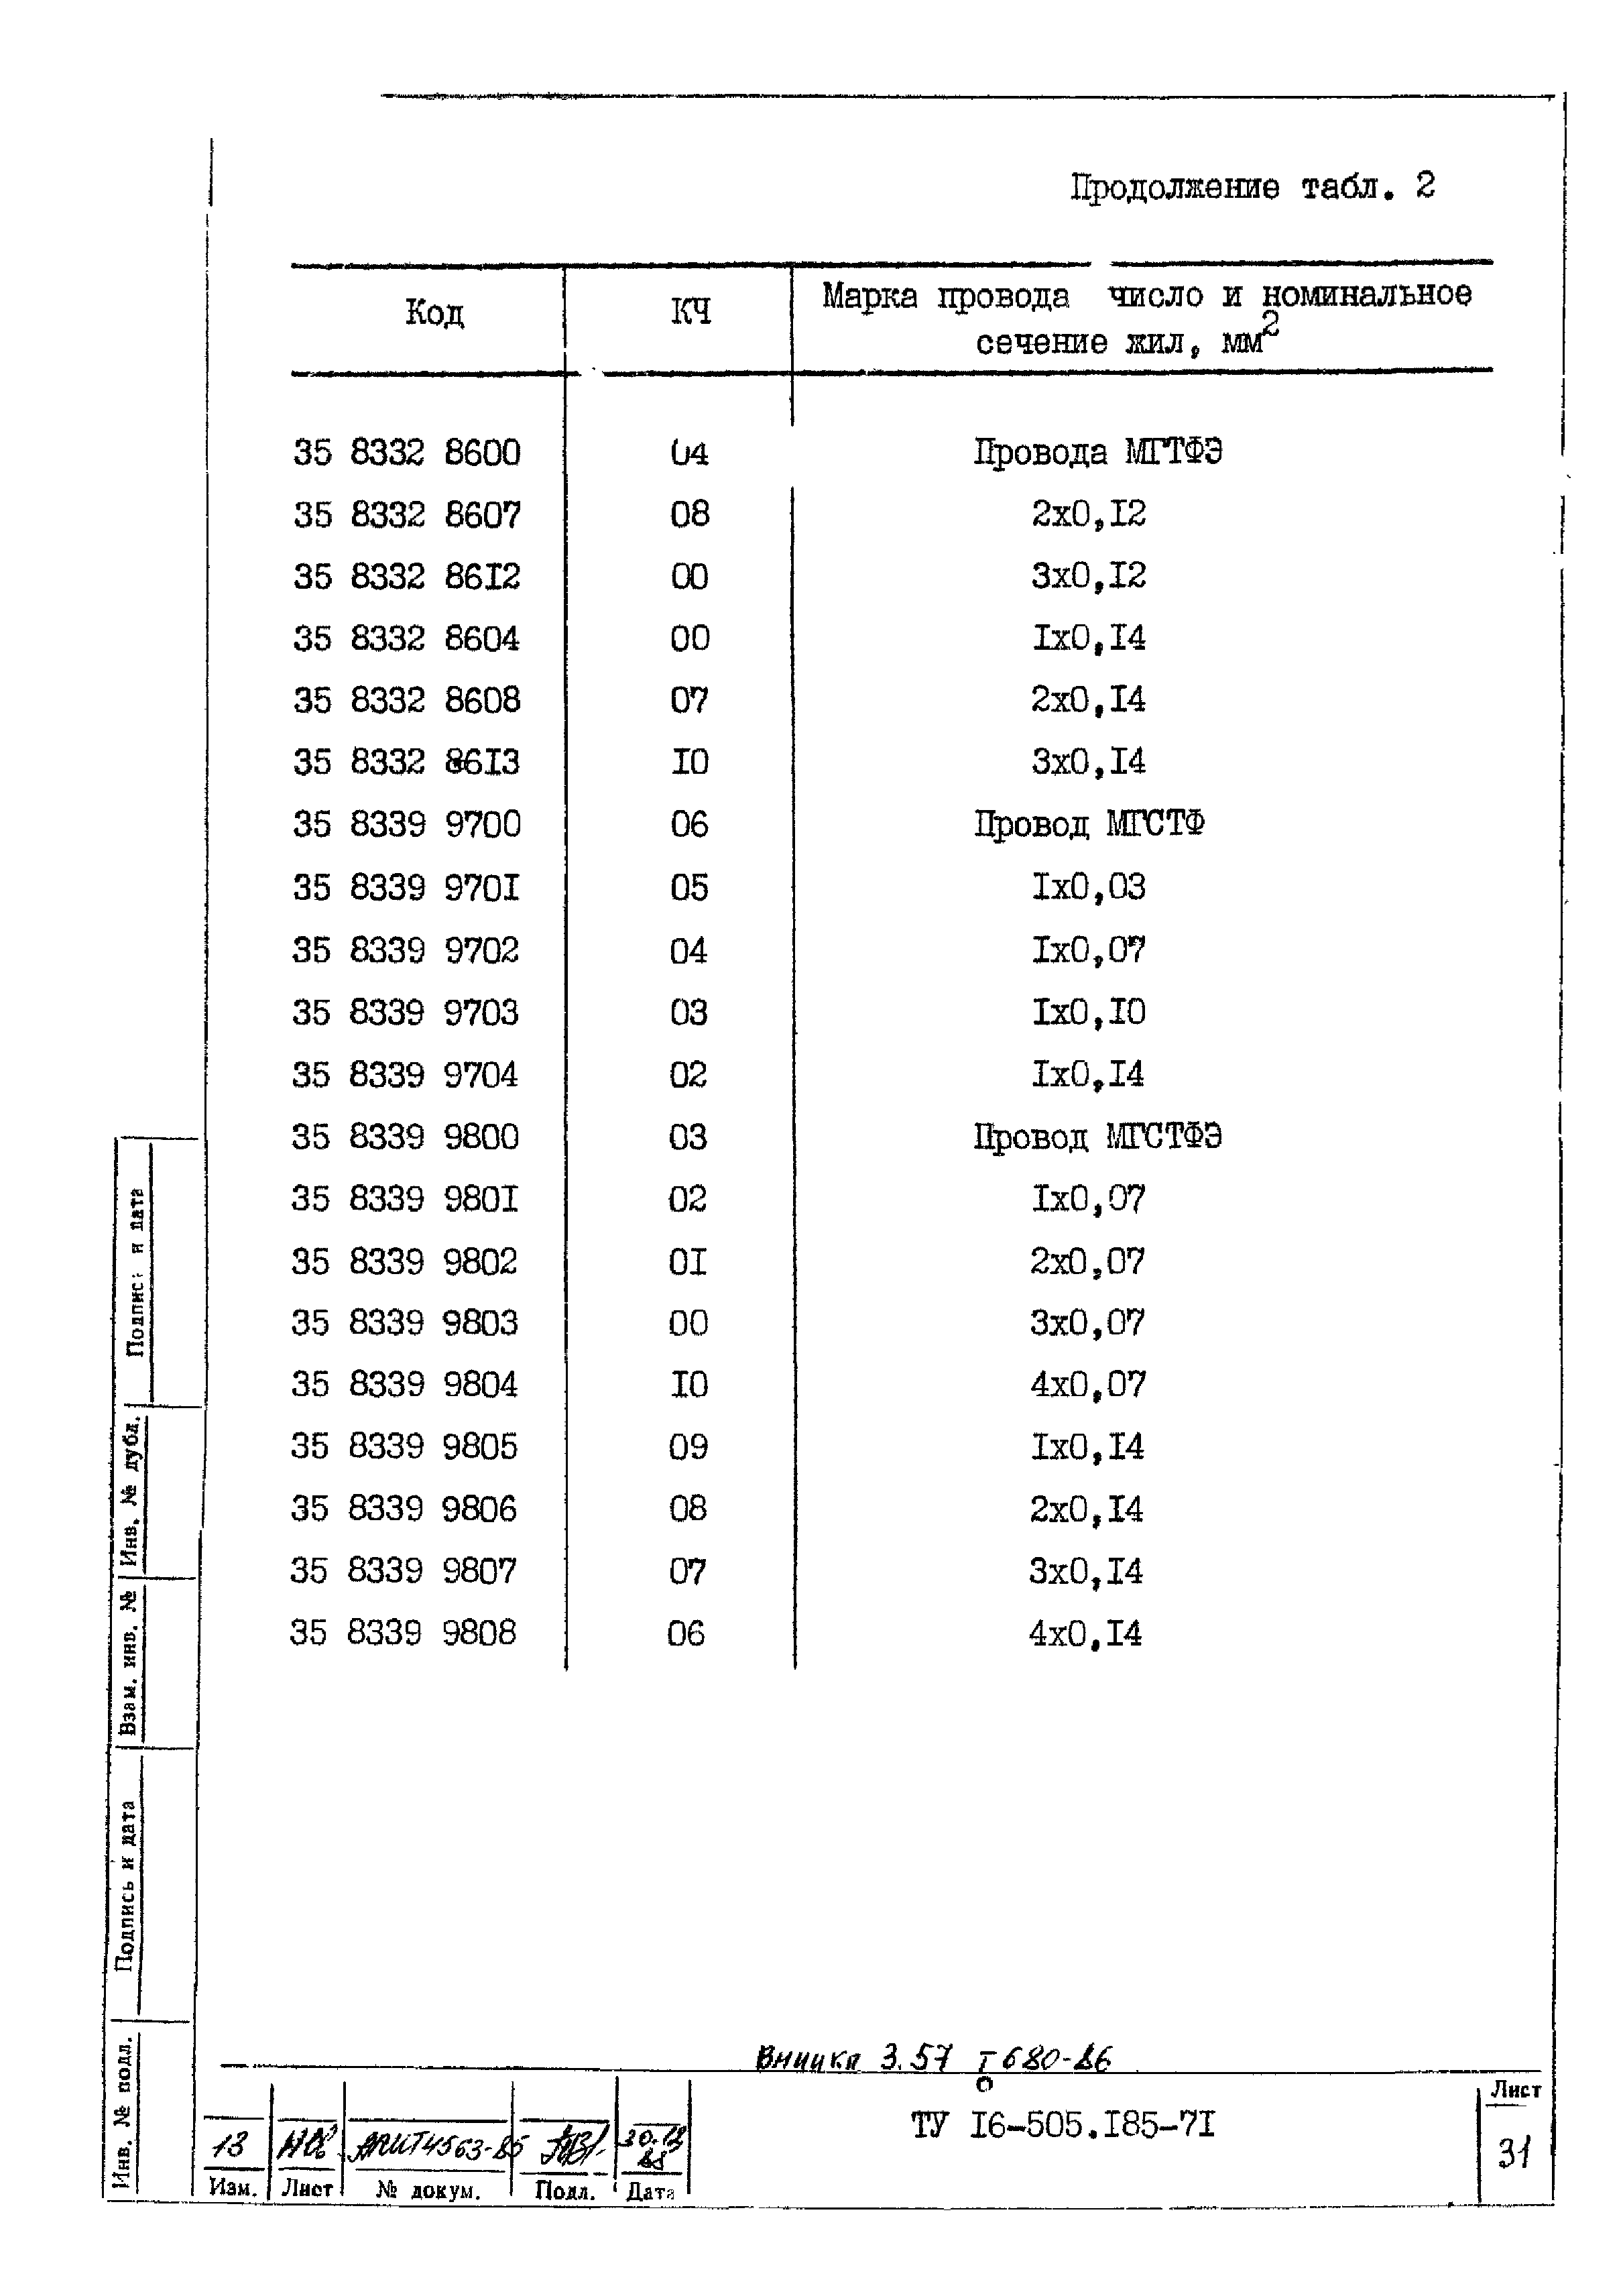 ТУ 16-505.185-71